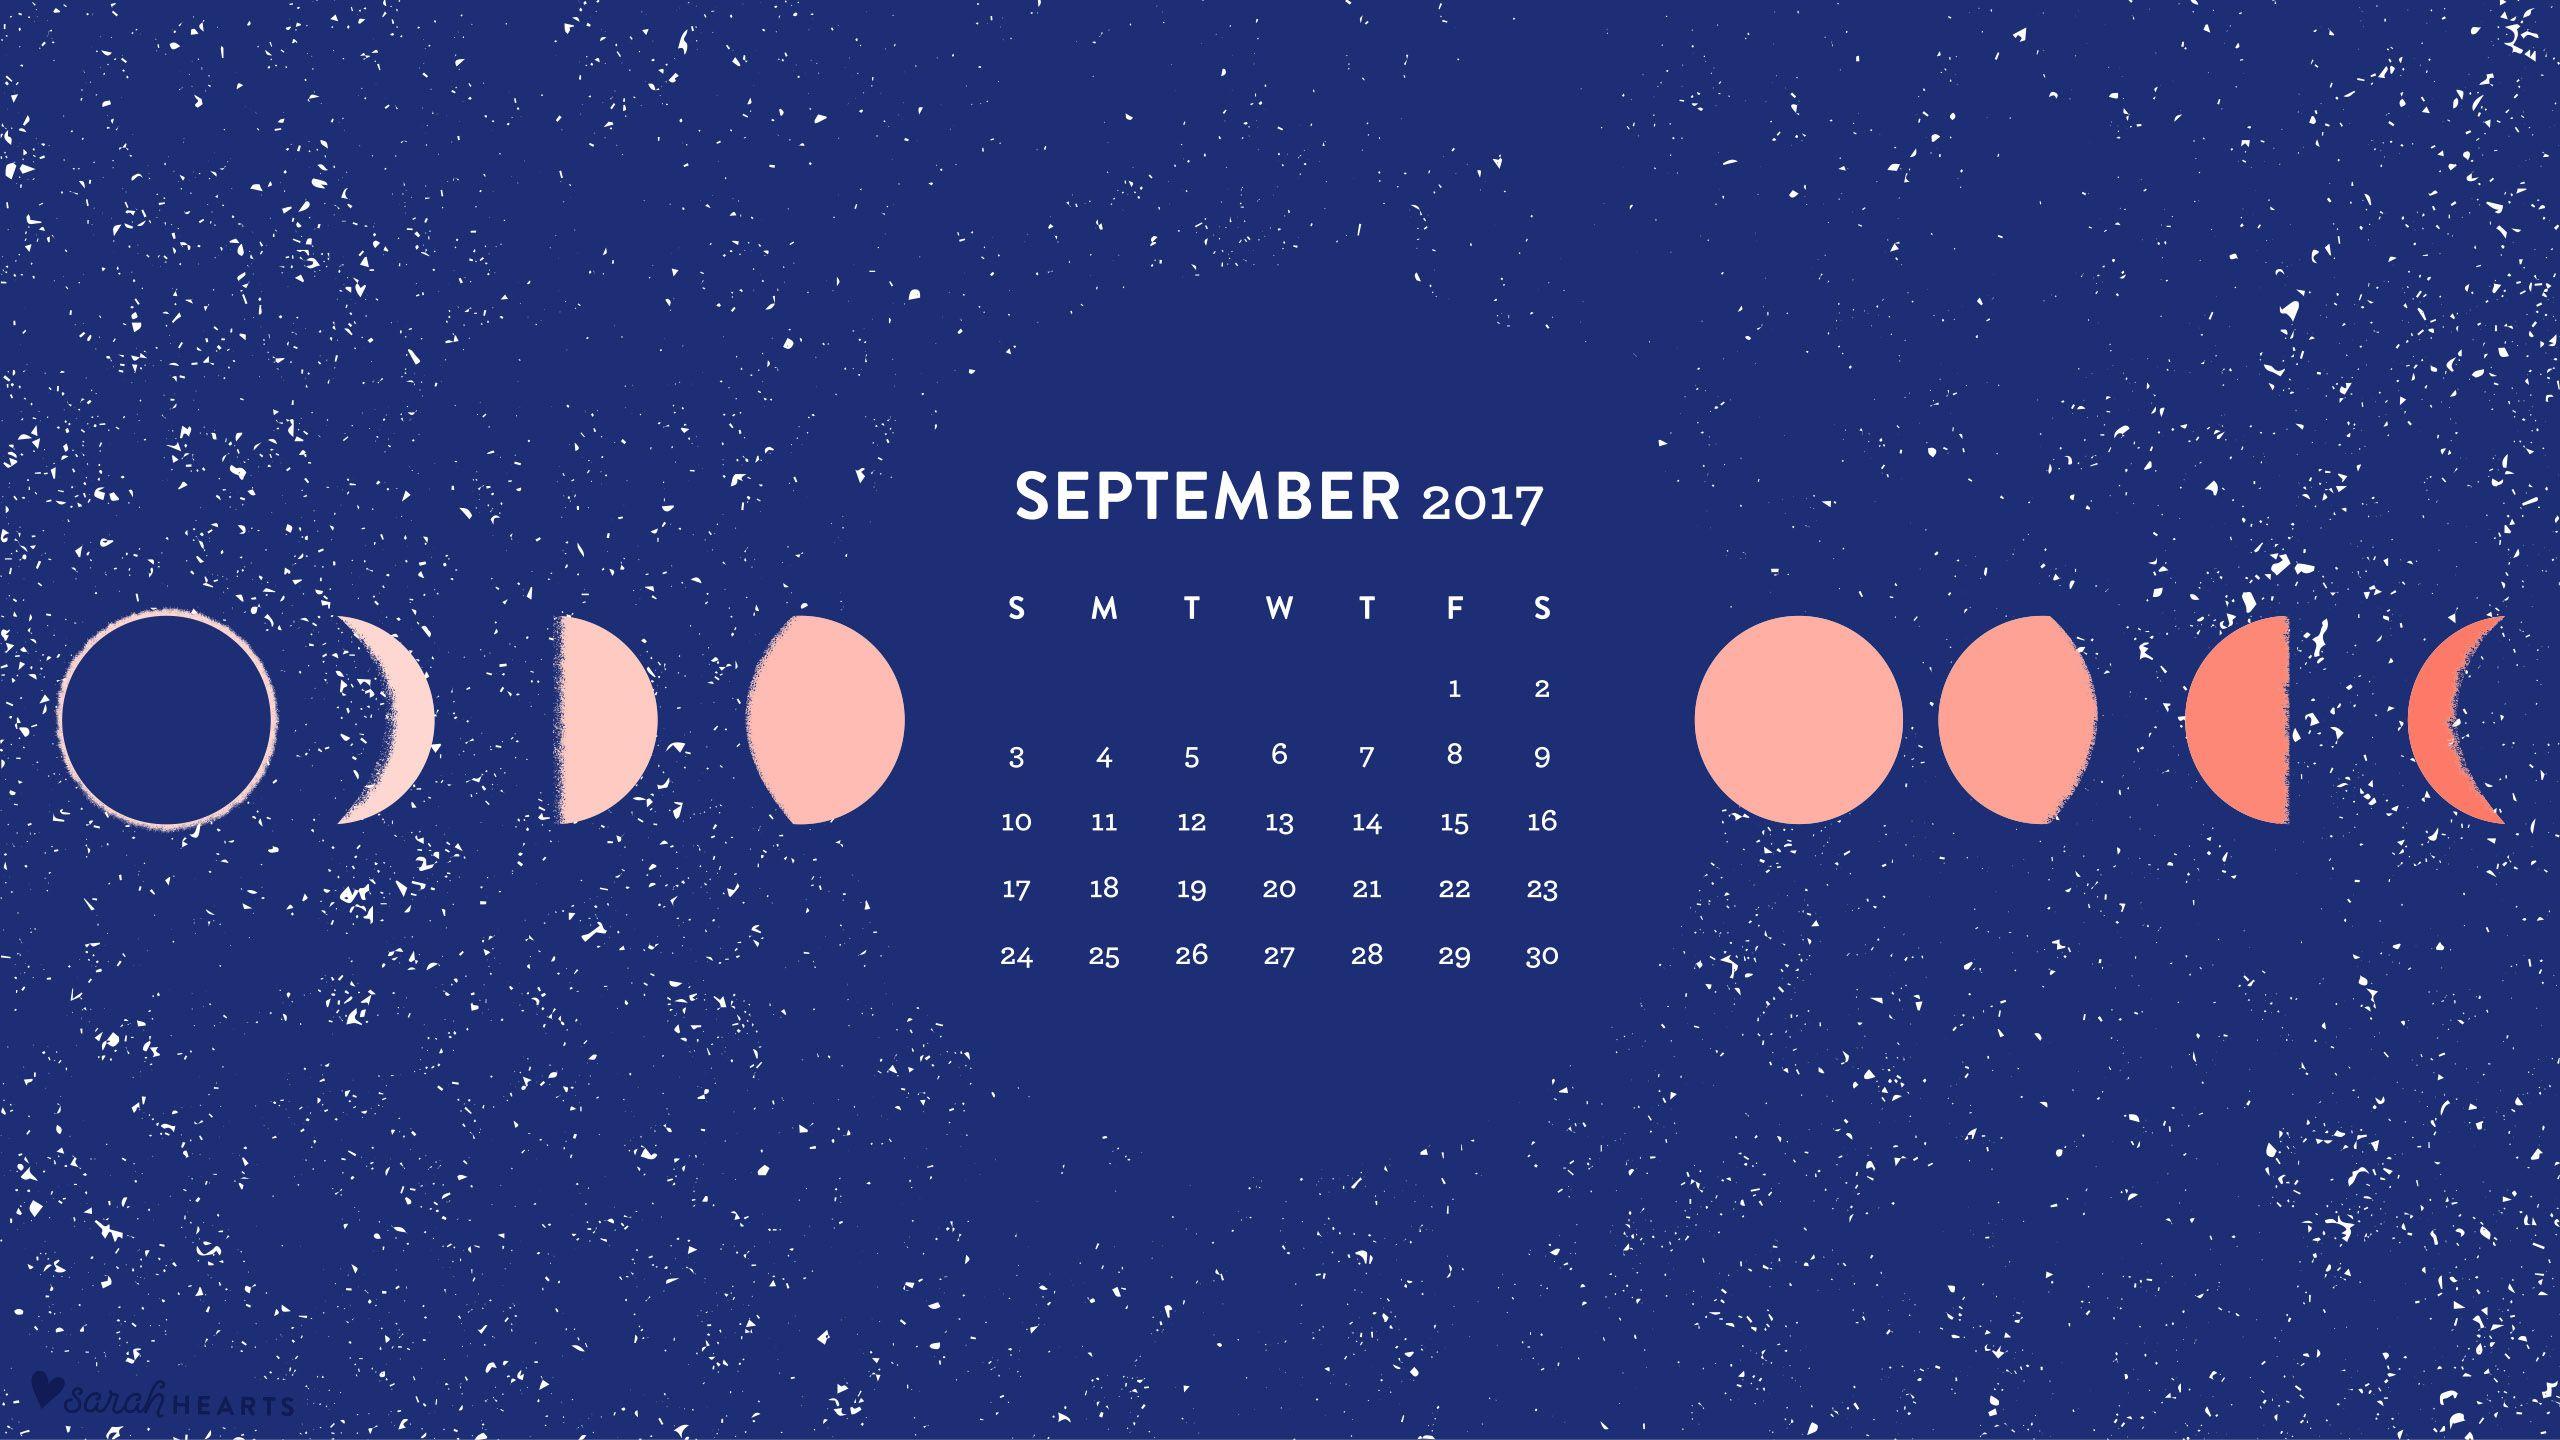 September 2017 Calendar Wallpaper